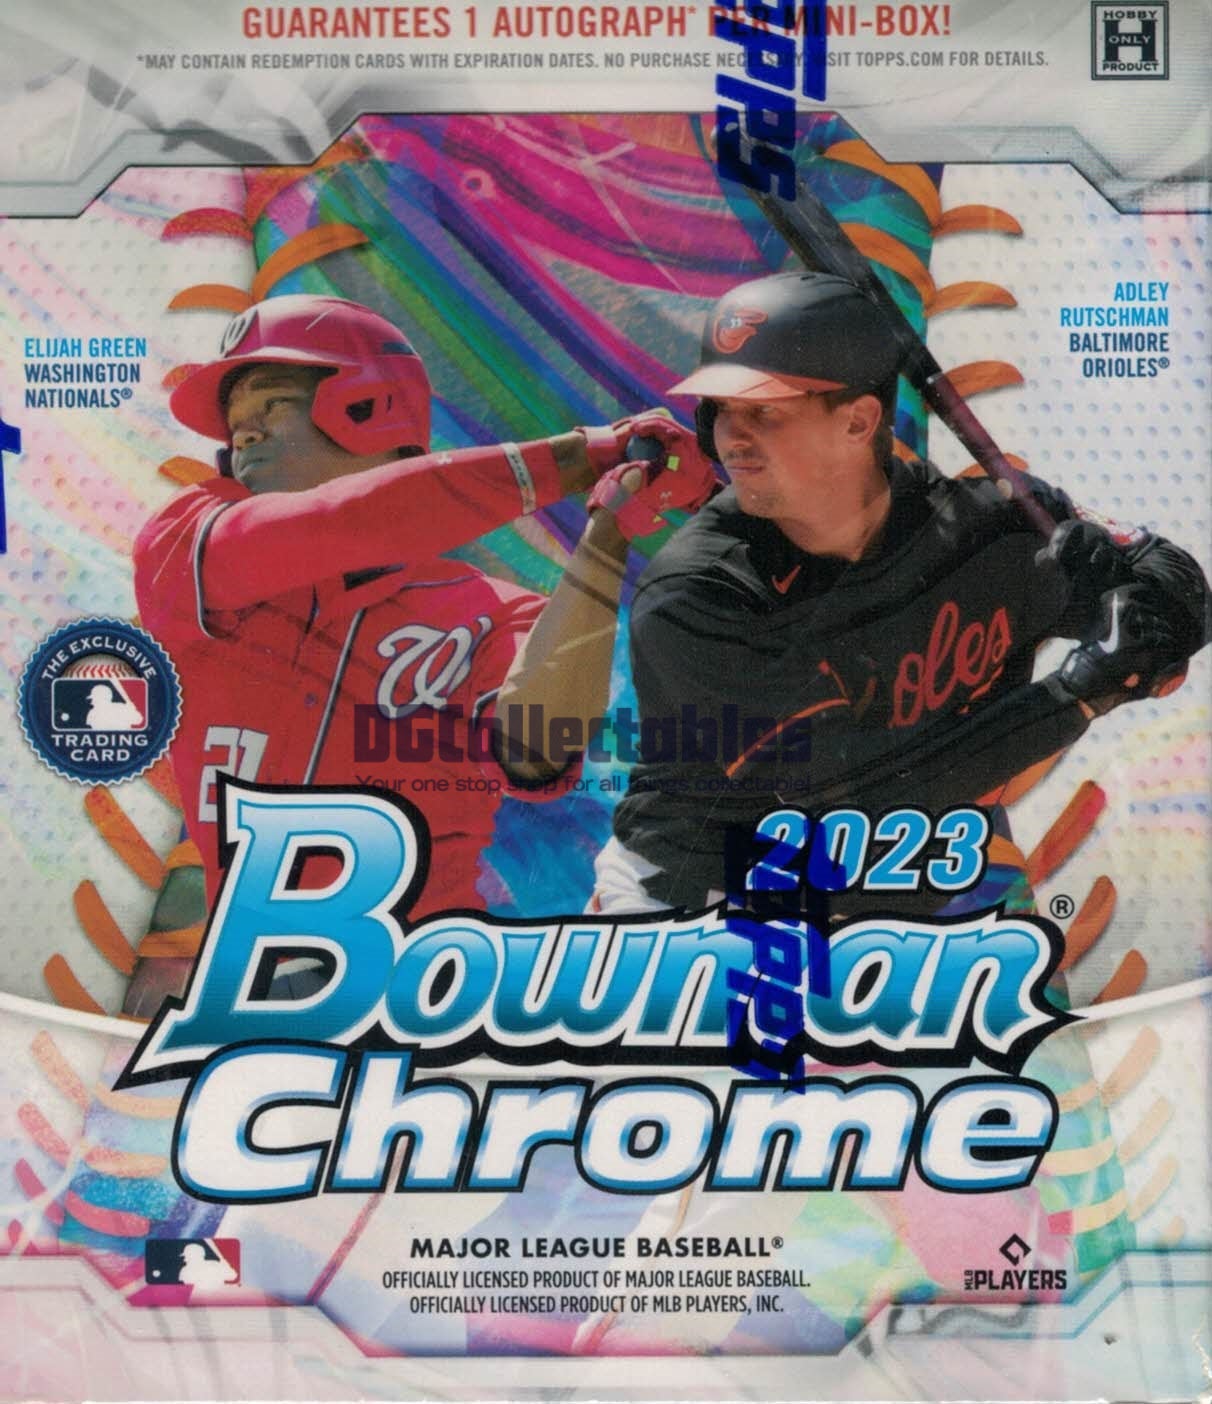 2023 Bowman Chrome Baseball Hobby, Mini-Box